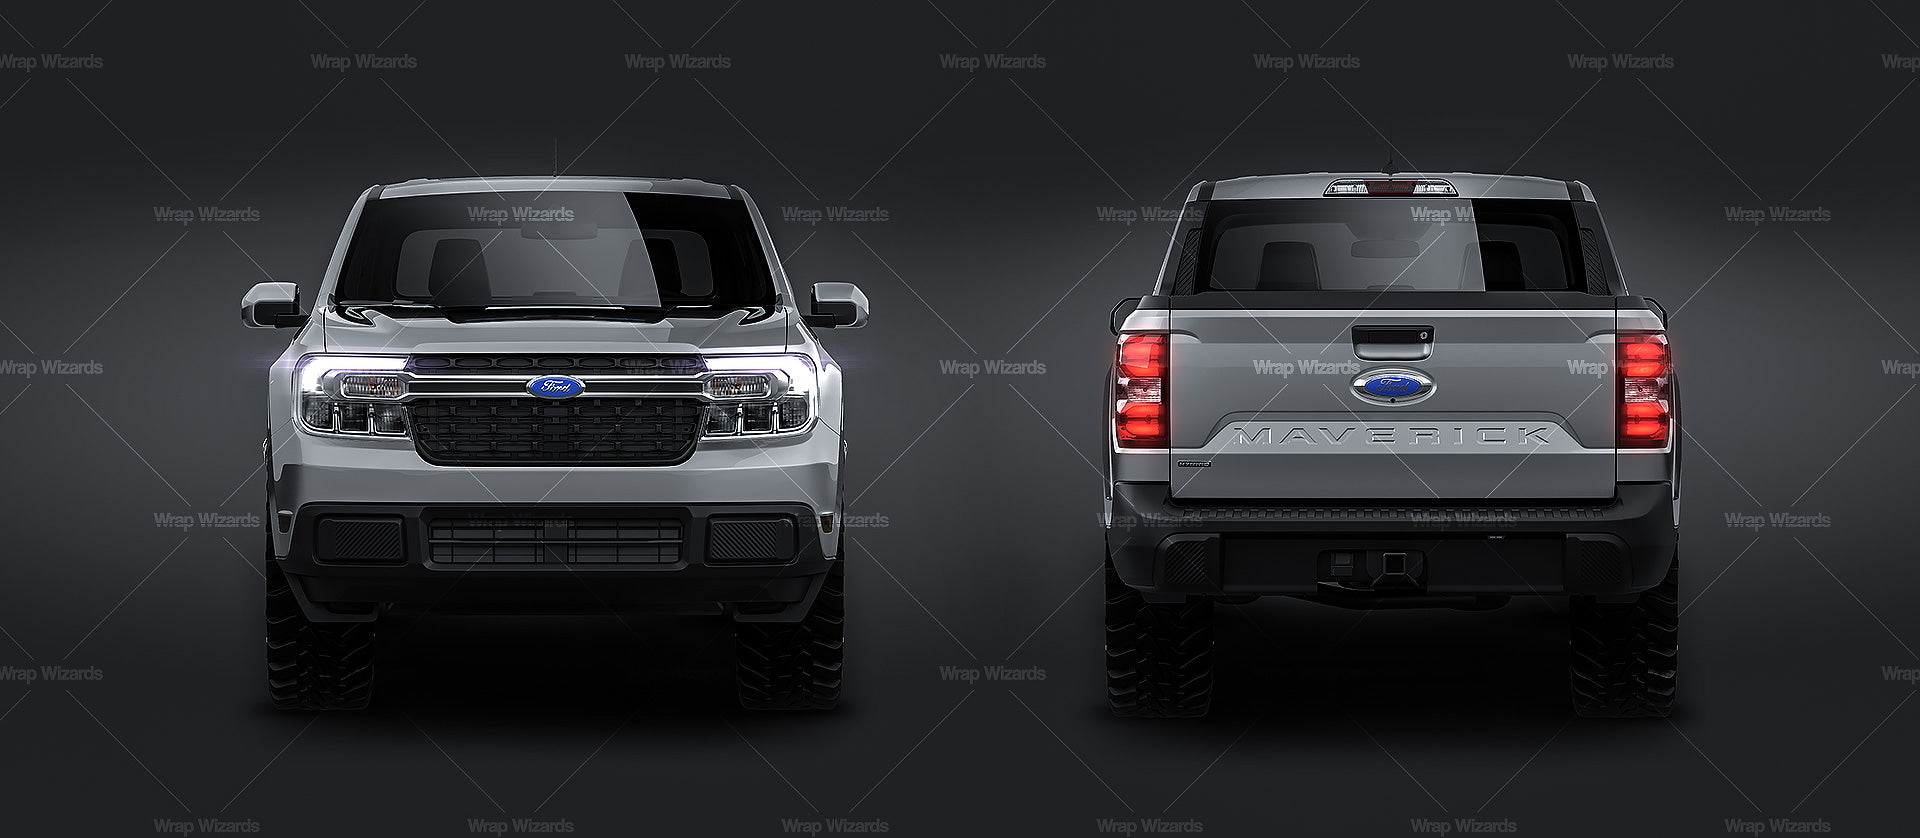 Ford Maverick XLT 2022 - Truck/Pick-up Mockup